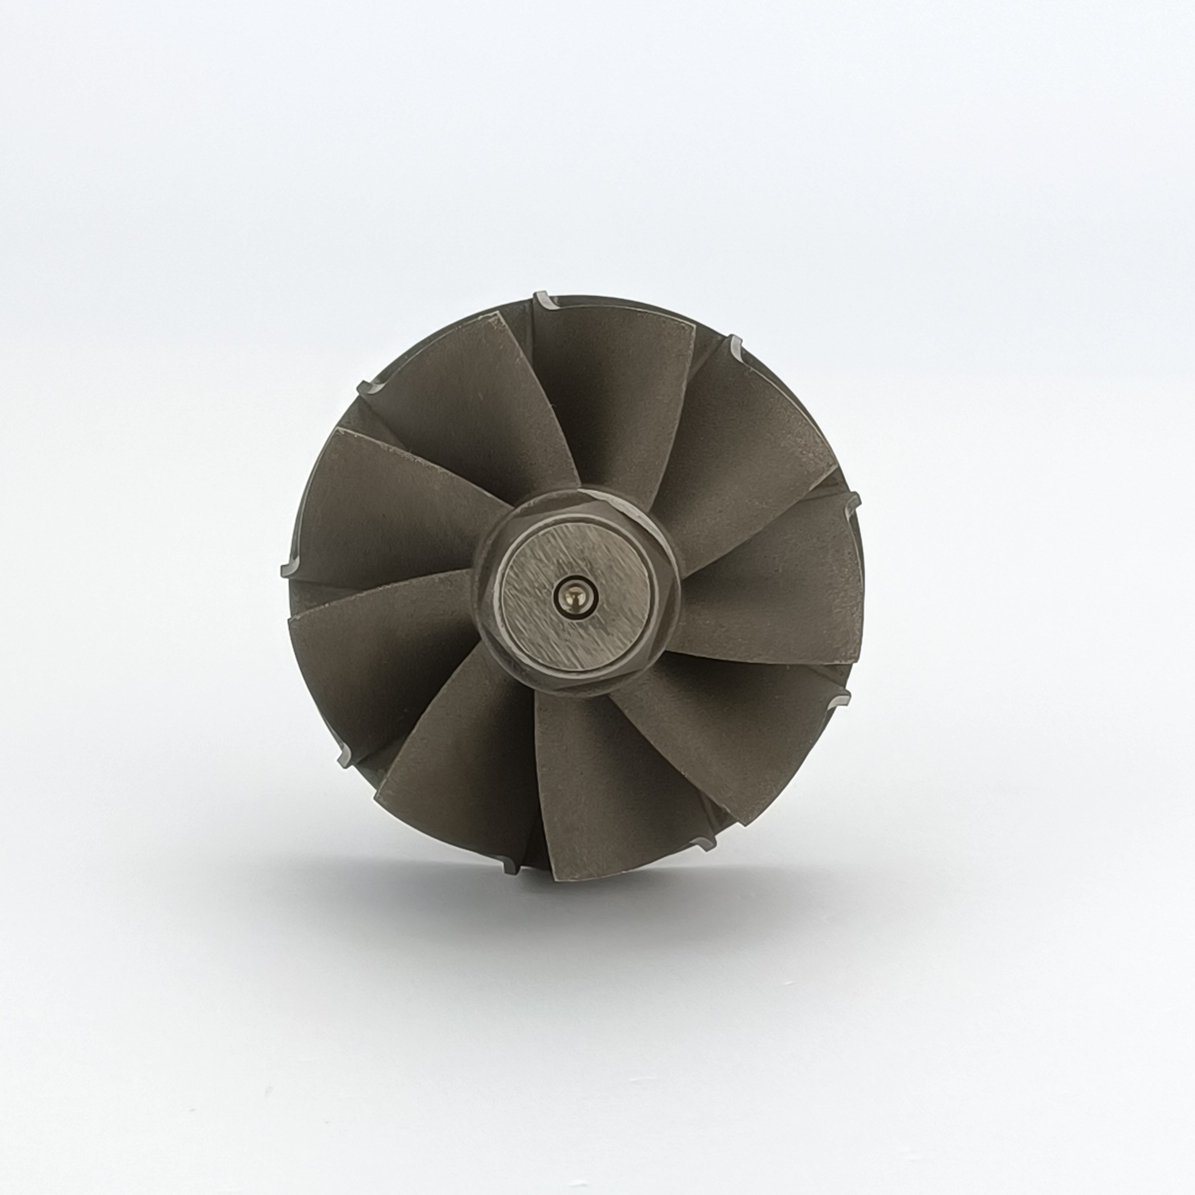 Turbo Turbine Wheel Shaft BV50 5304-120-8504 Ind 48mm Exd 44.5mm for 5304-970-0060/5304-970-0061 Turbochargers